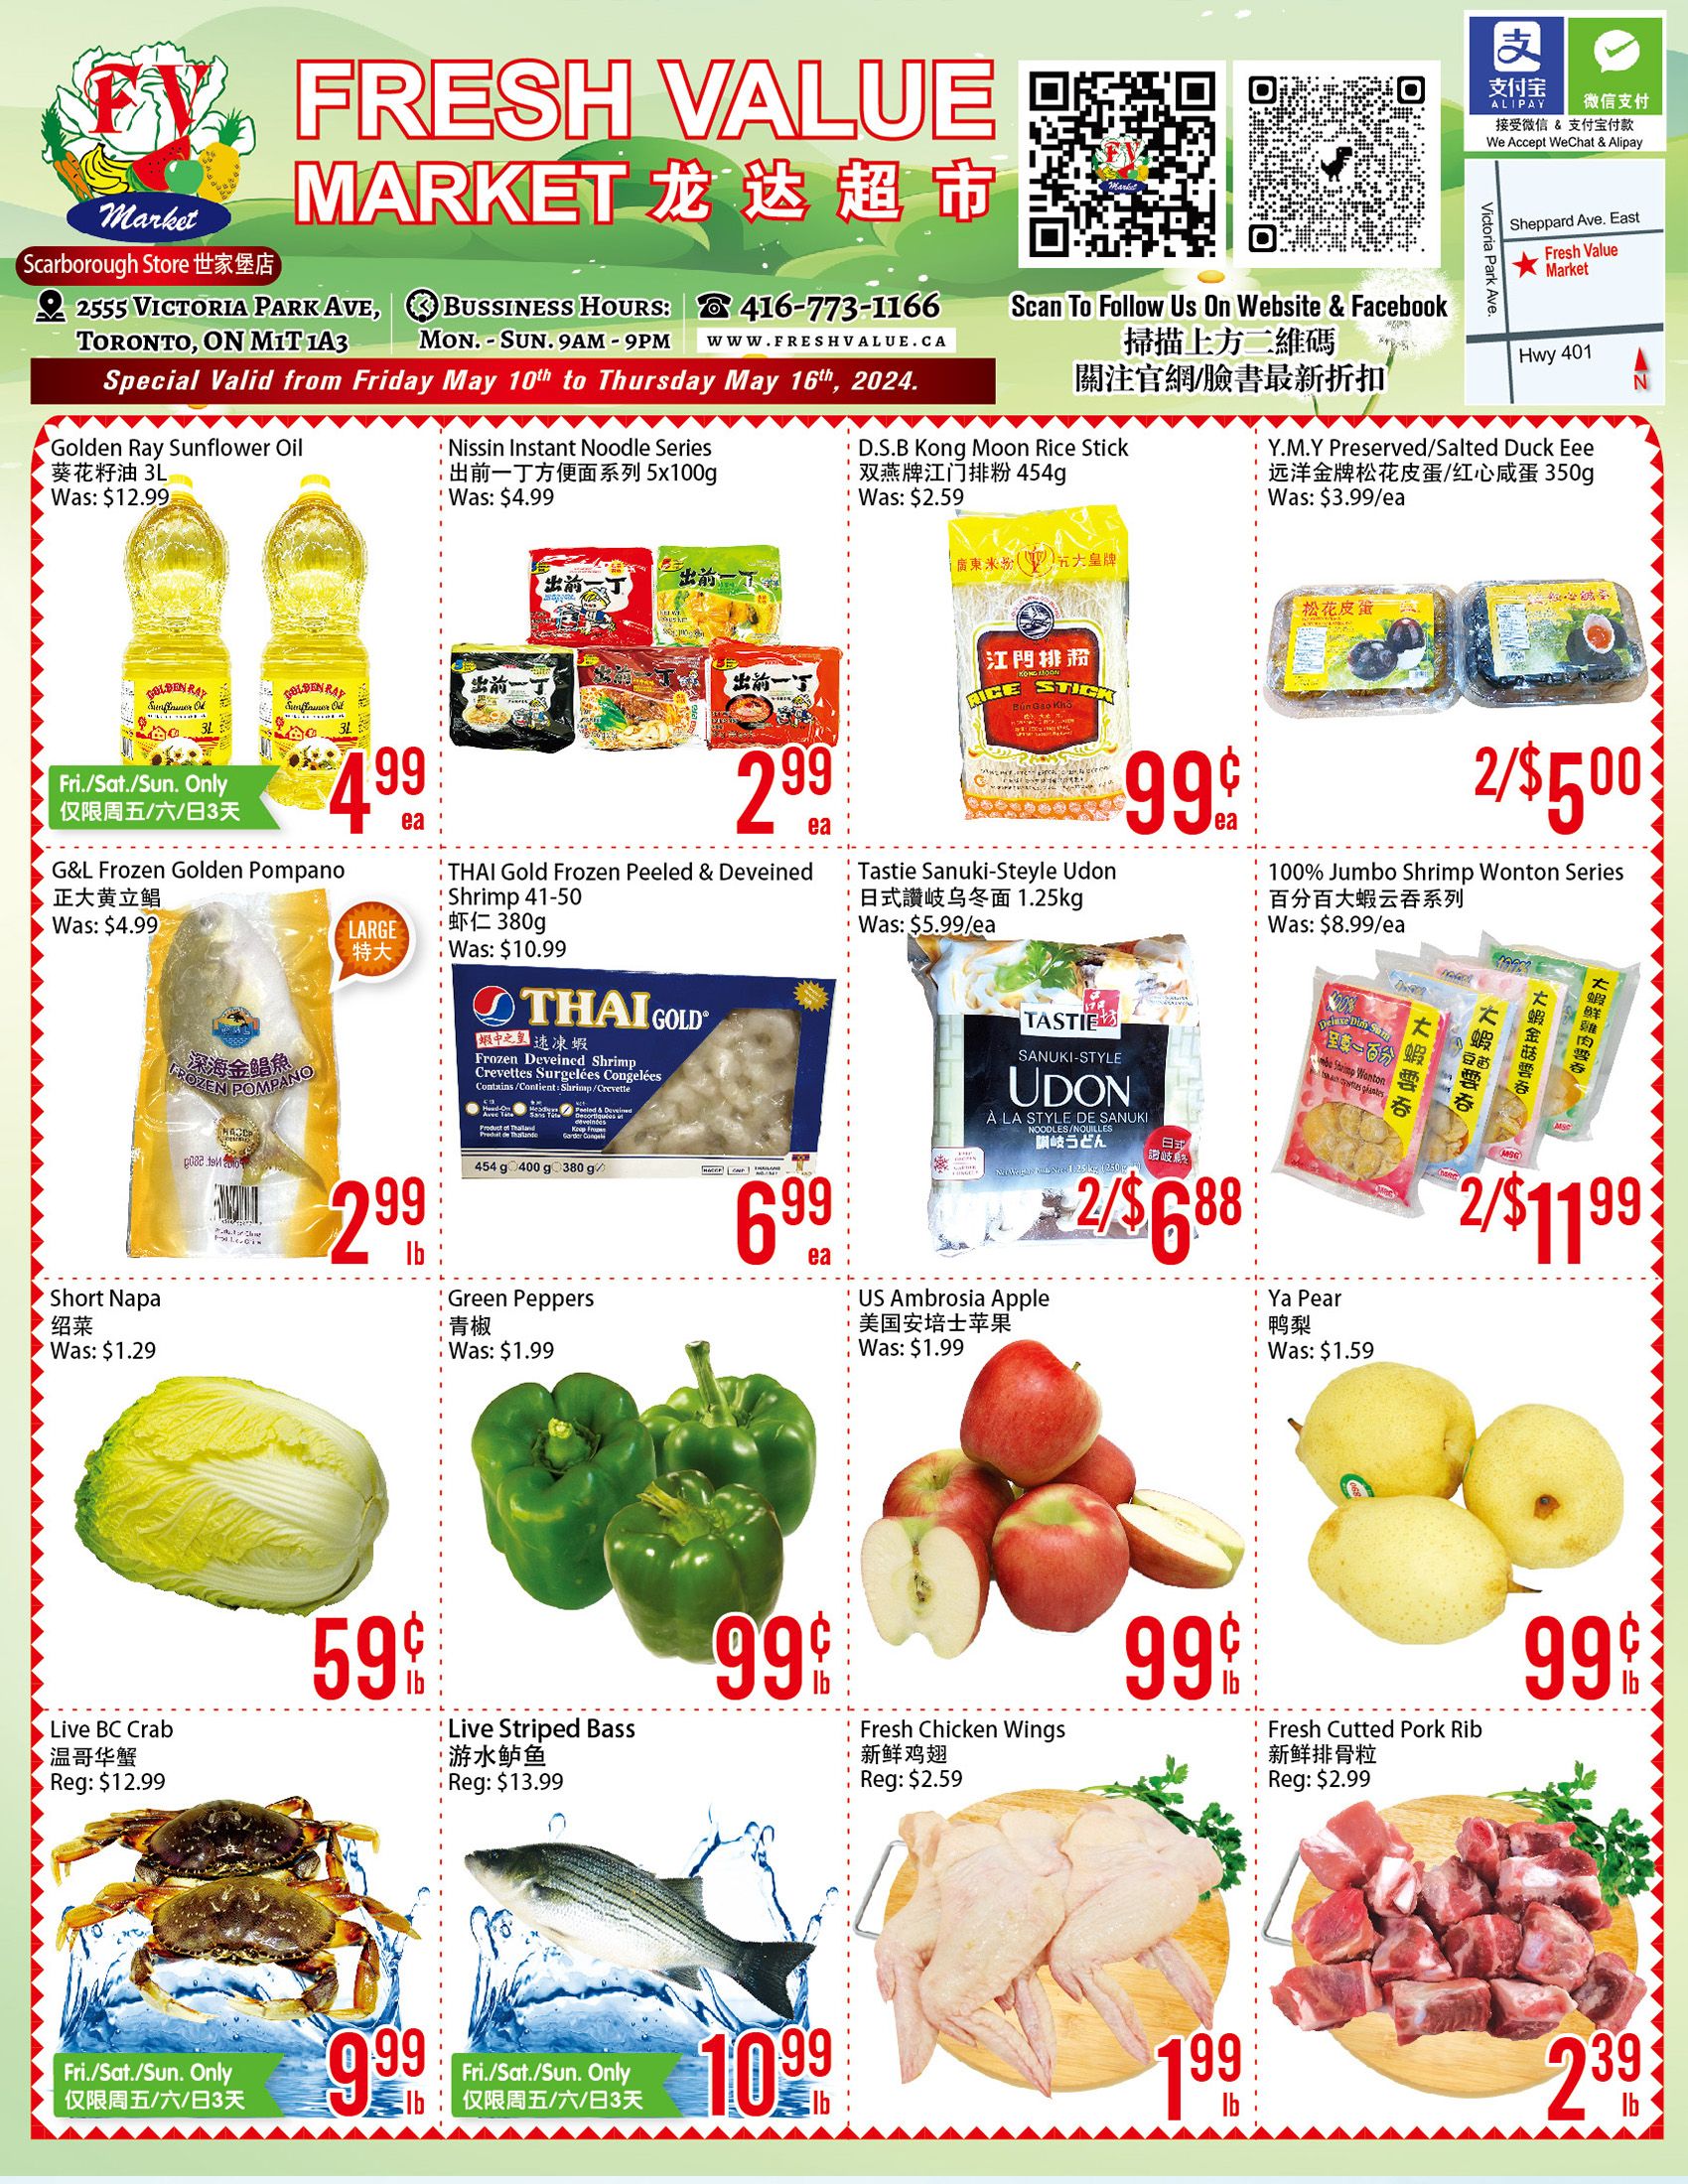 Fresh Value Market - Scarborough Store - Weekly Flyer Specials